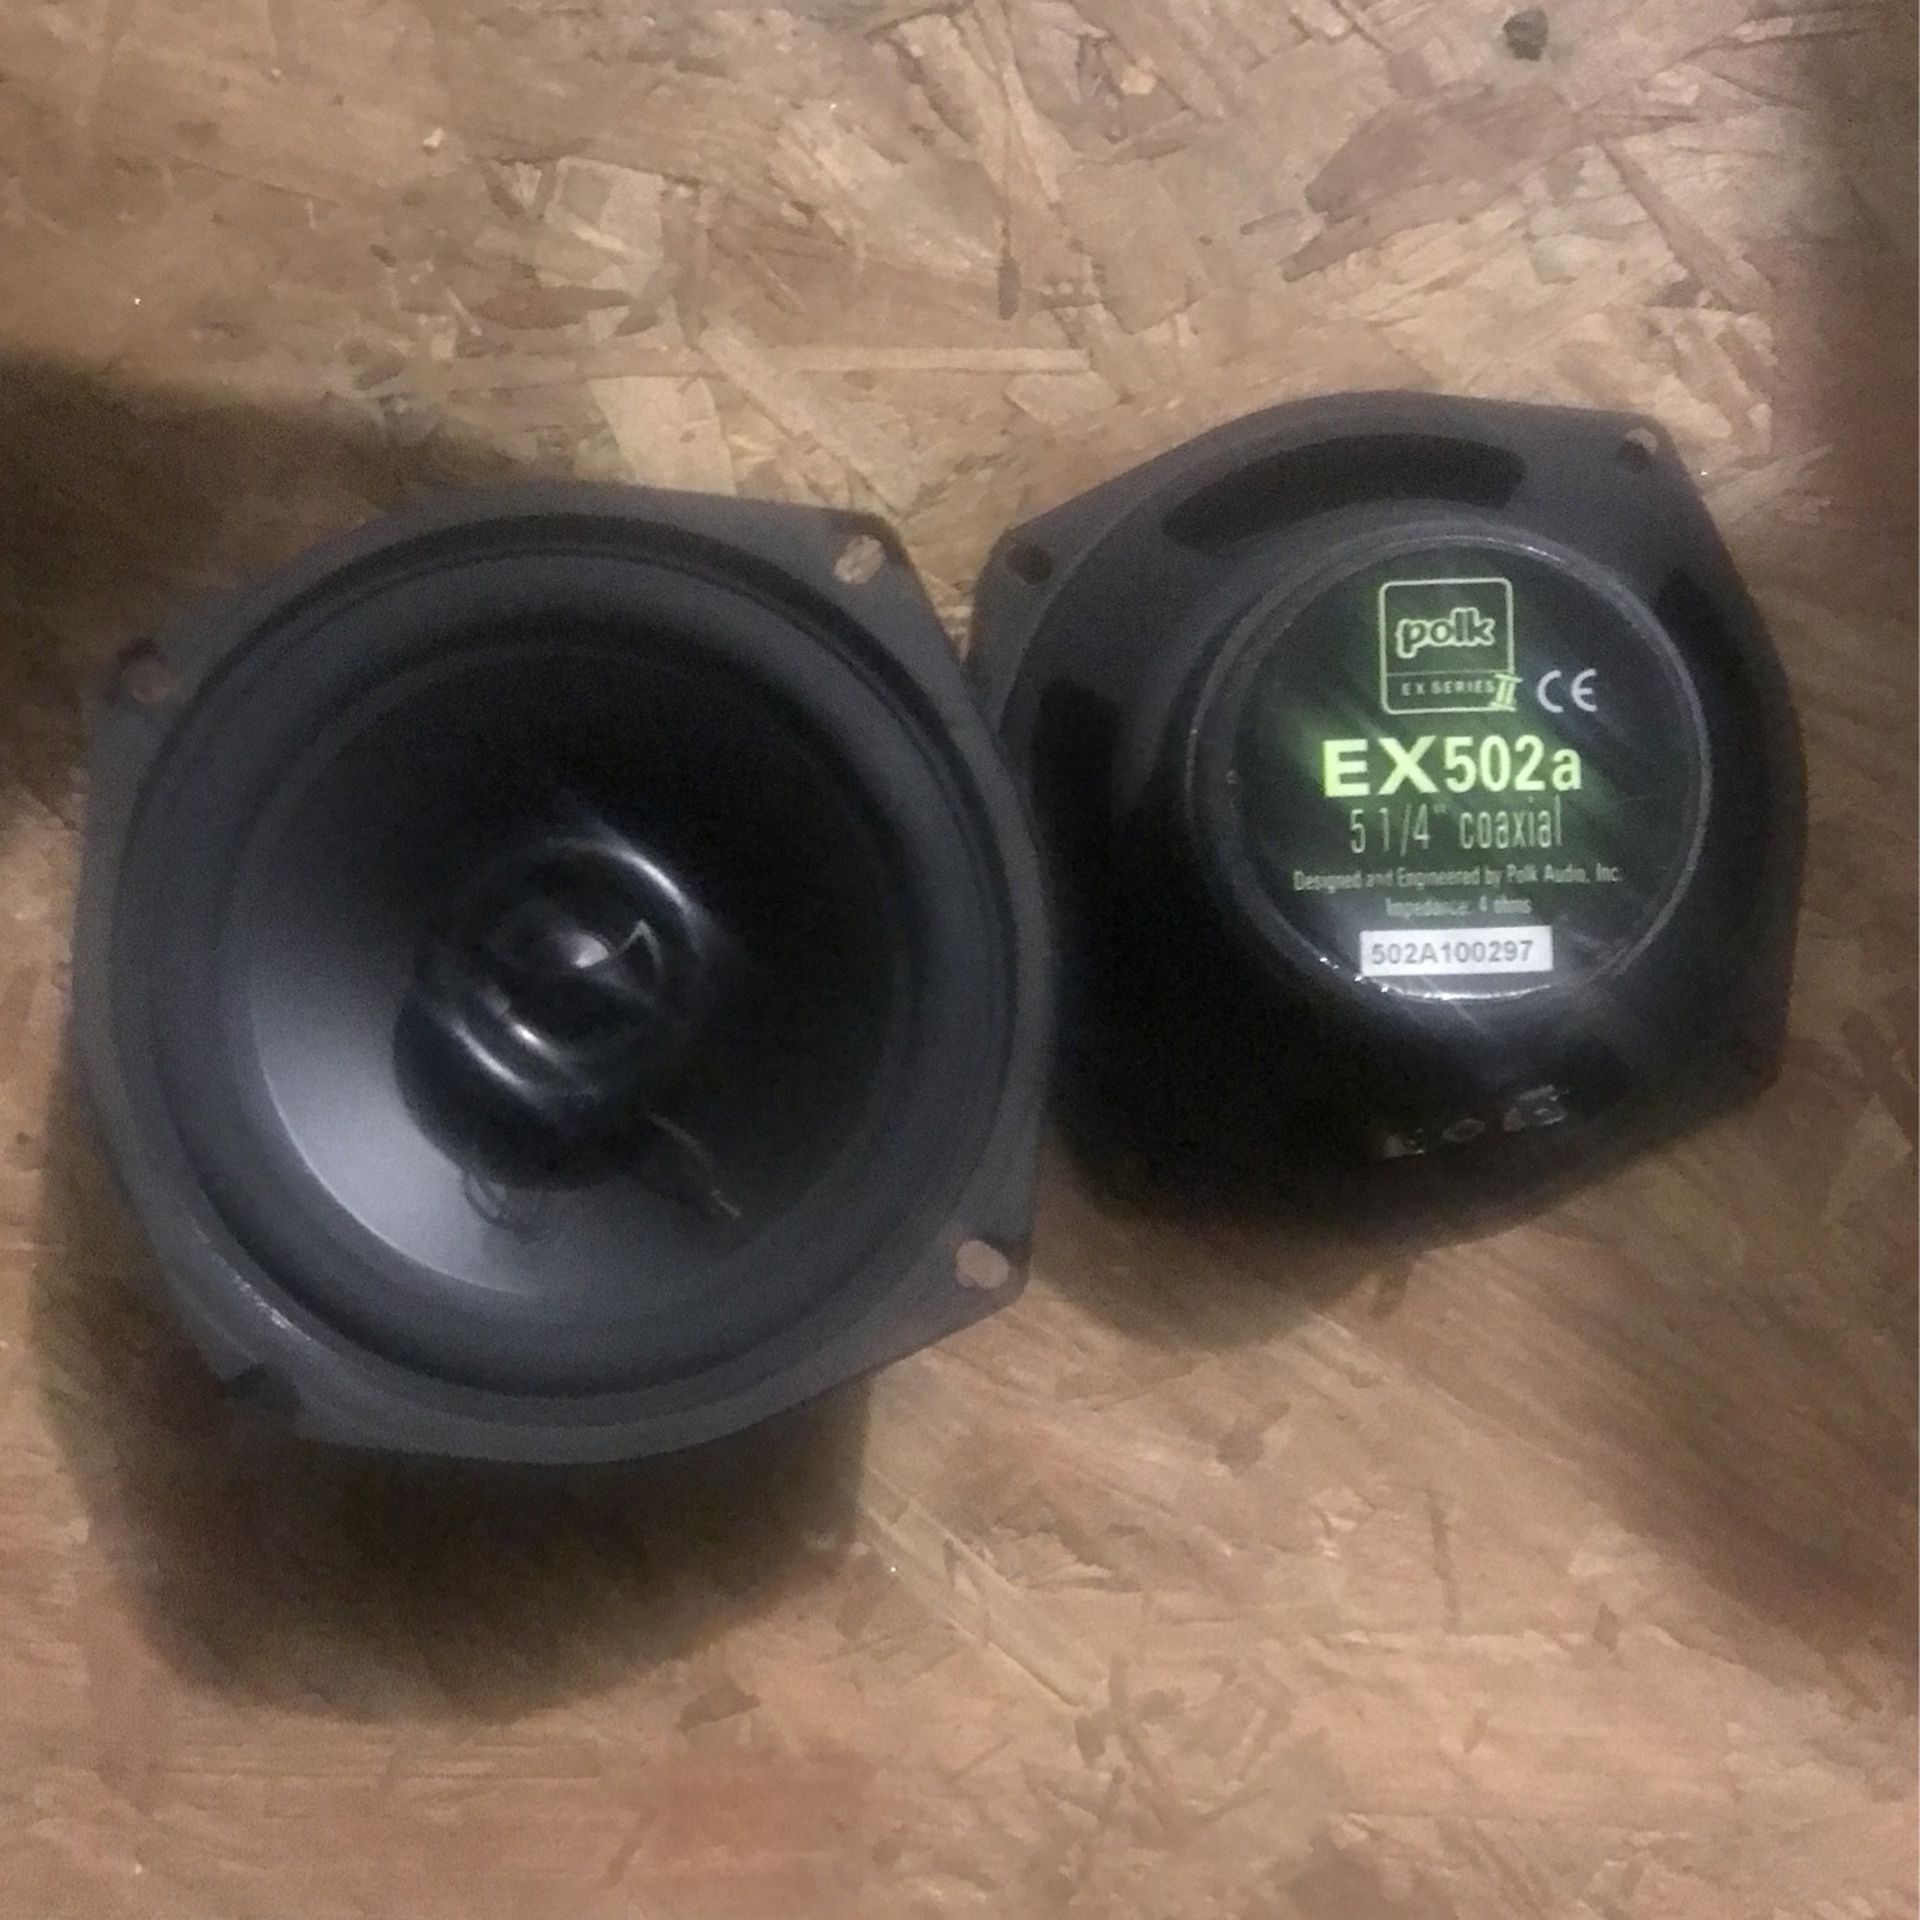 5.25 inch Polk audio speakers